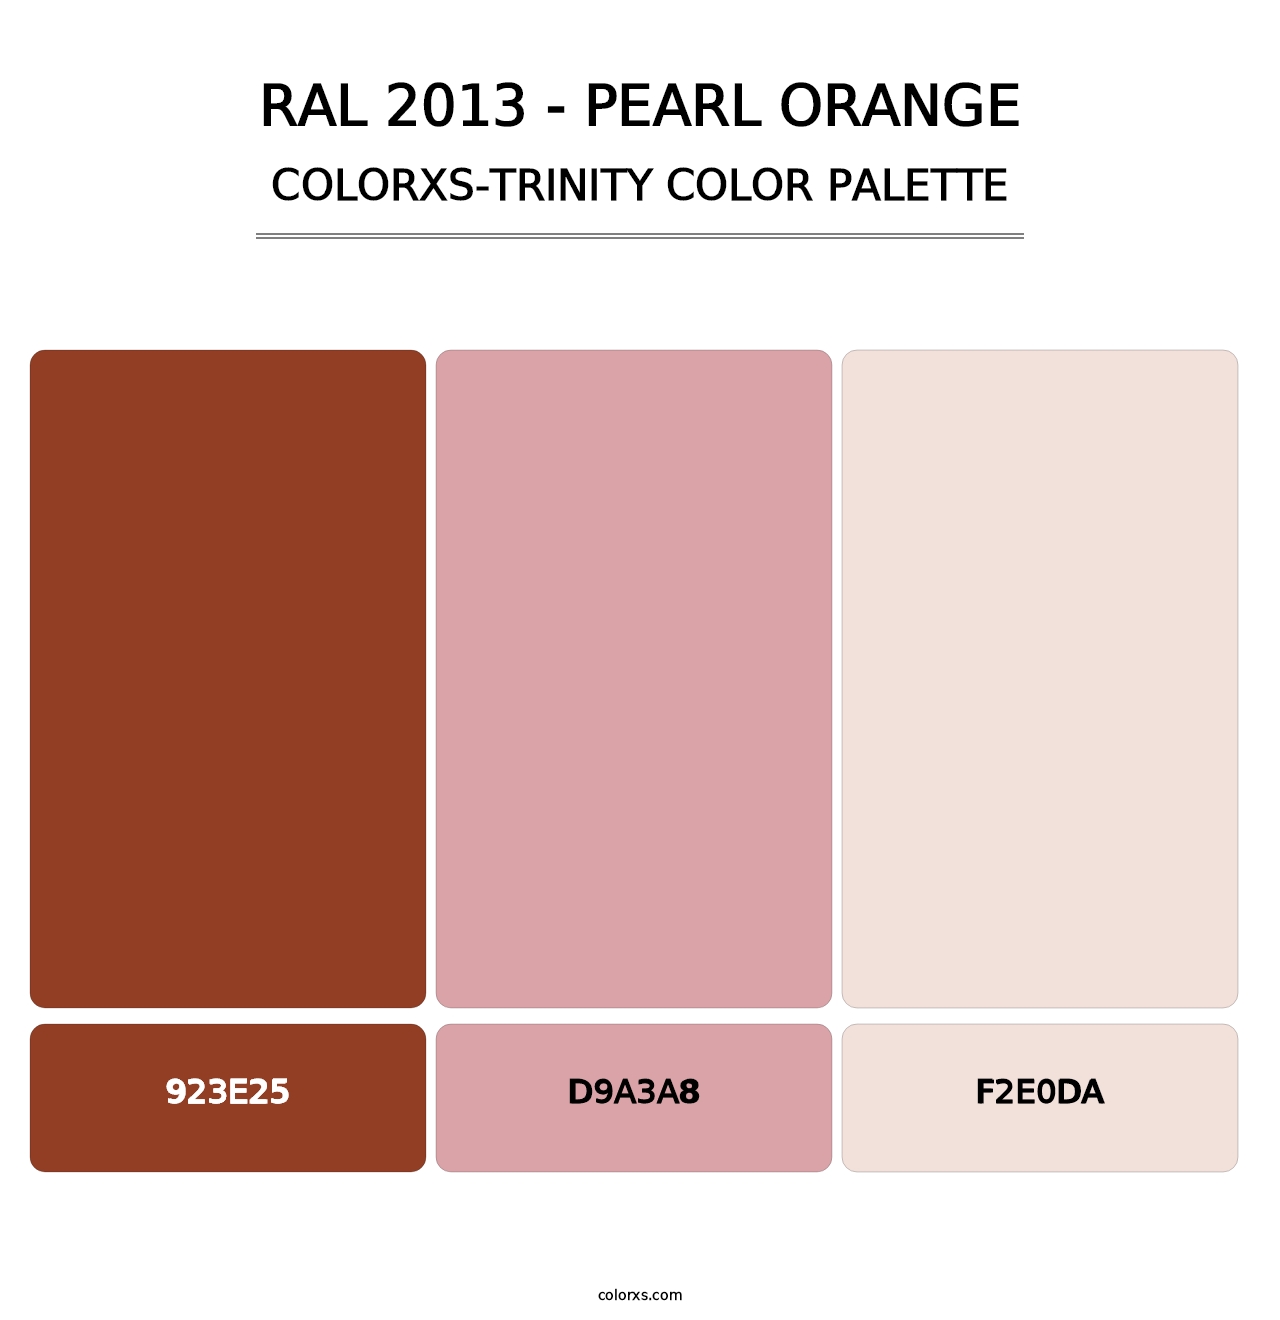 RAL 2013 - Pearl Orange - Colorxs Trinity Palette